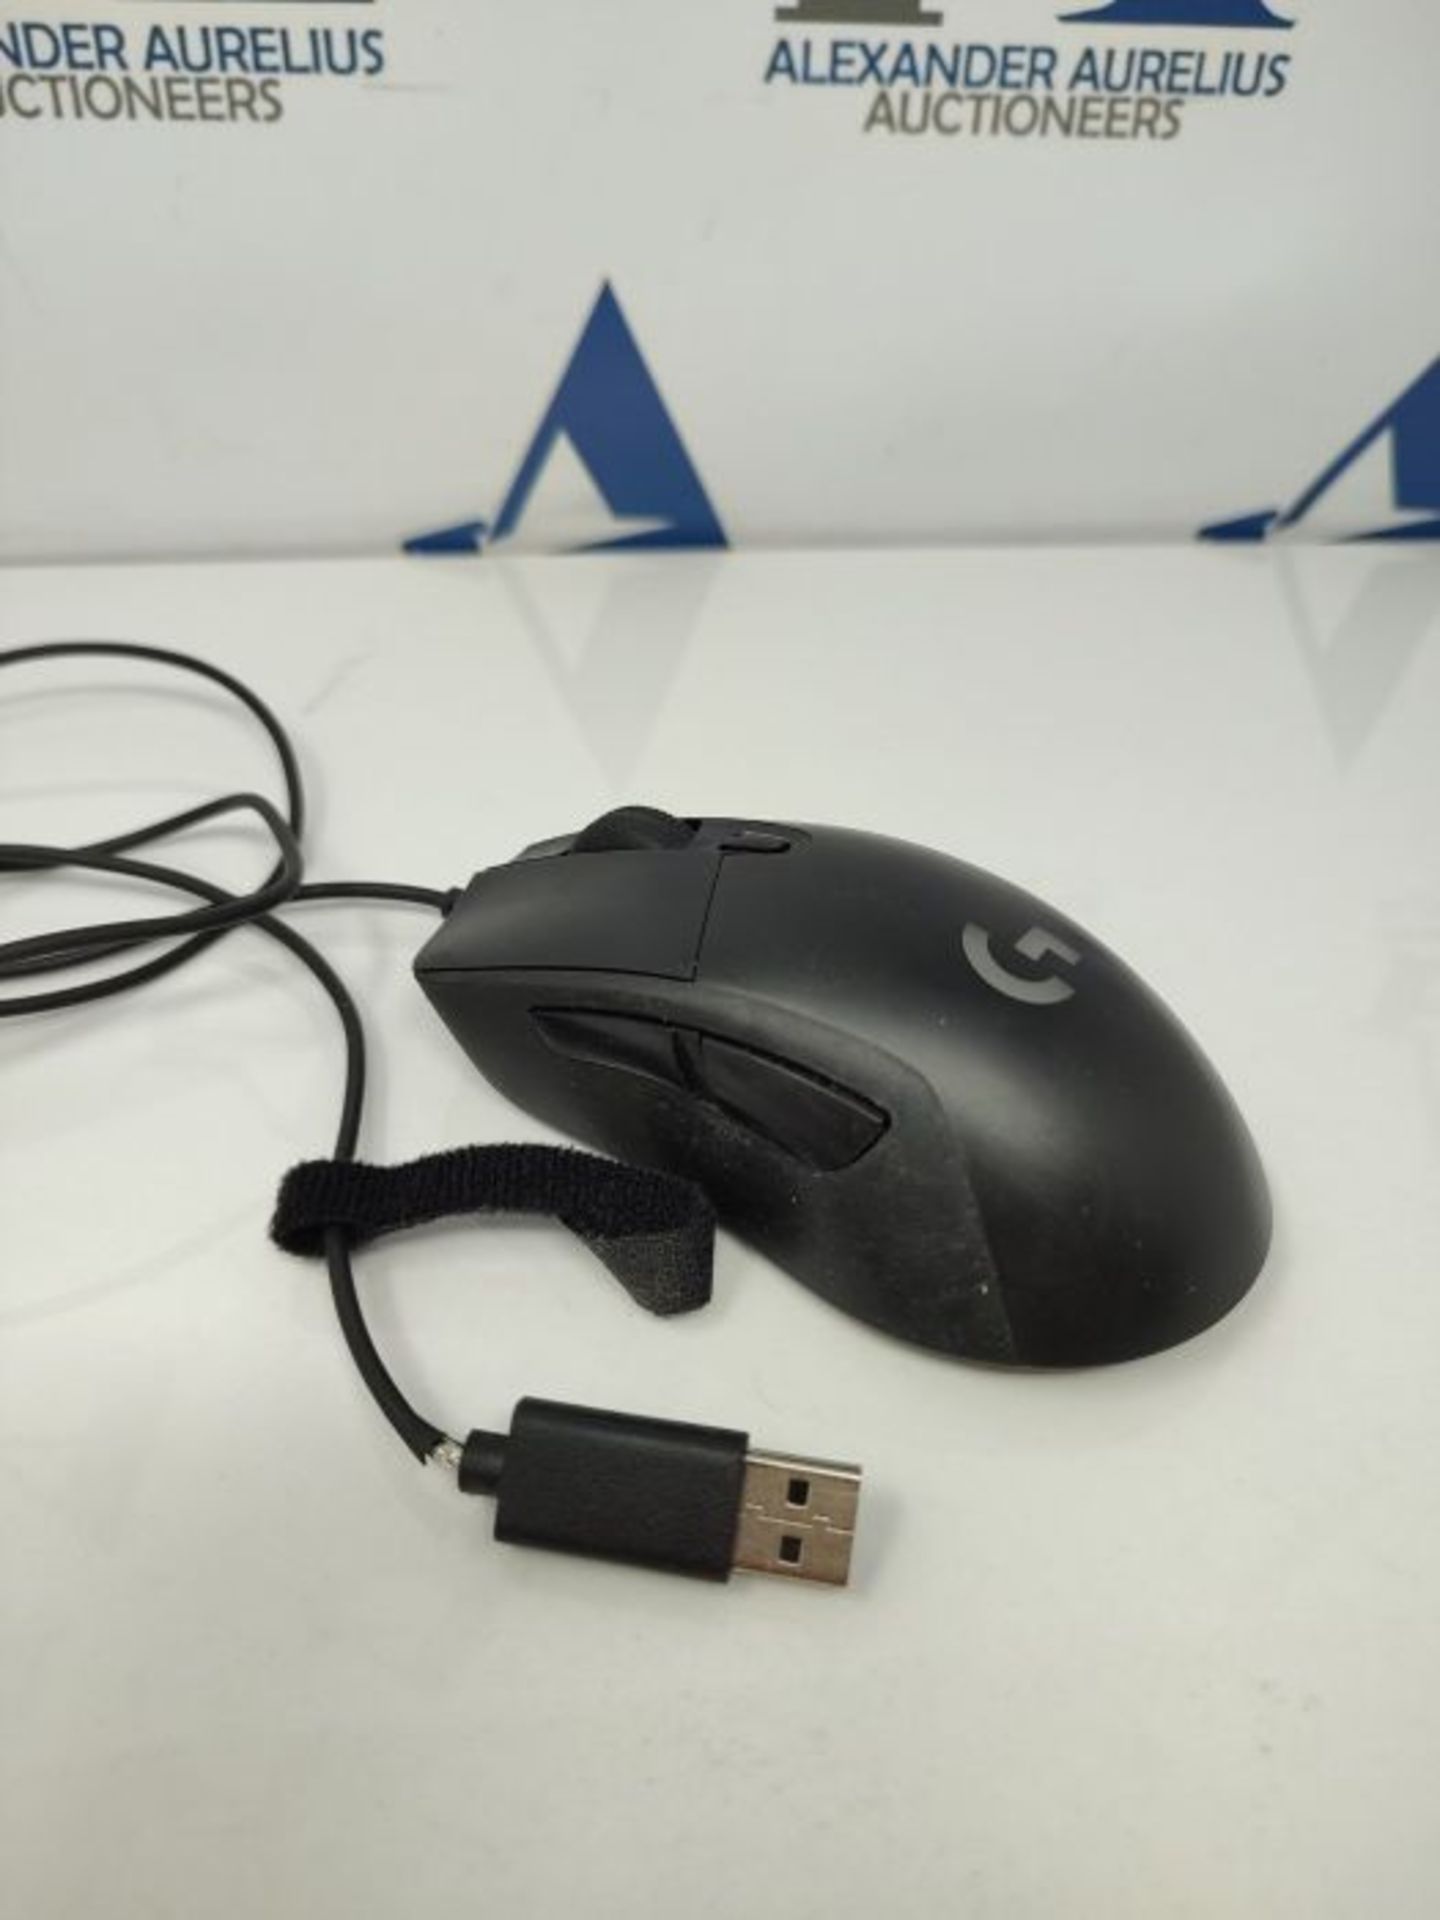 Logitech G403 HERO gaming mouse with HERO 25K DPI sensor, LIGHTSYNC RGB, light weight - Image 3 of 3